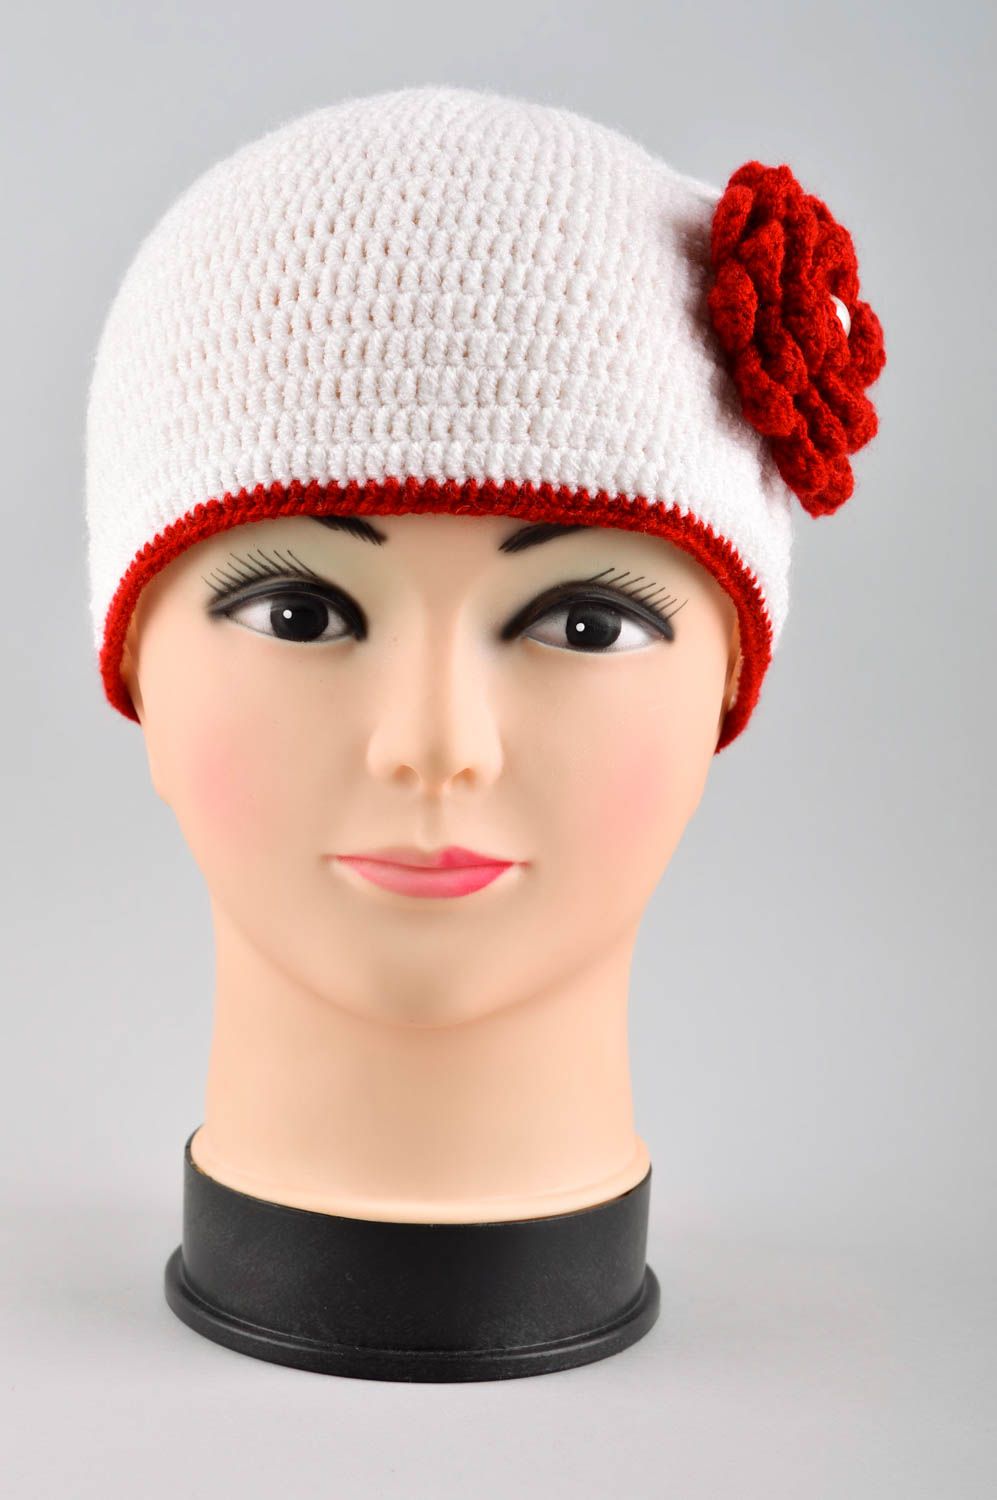 Handmade hat winter hat for children gift for girl warm cap knitted hat photo 2